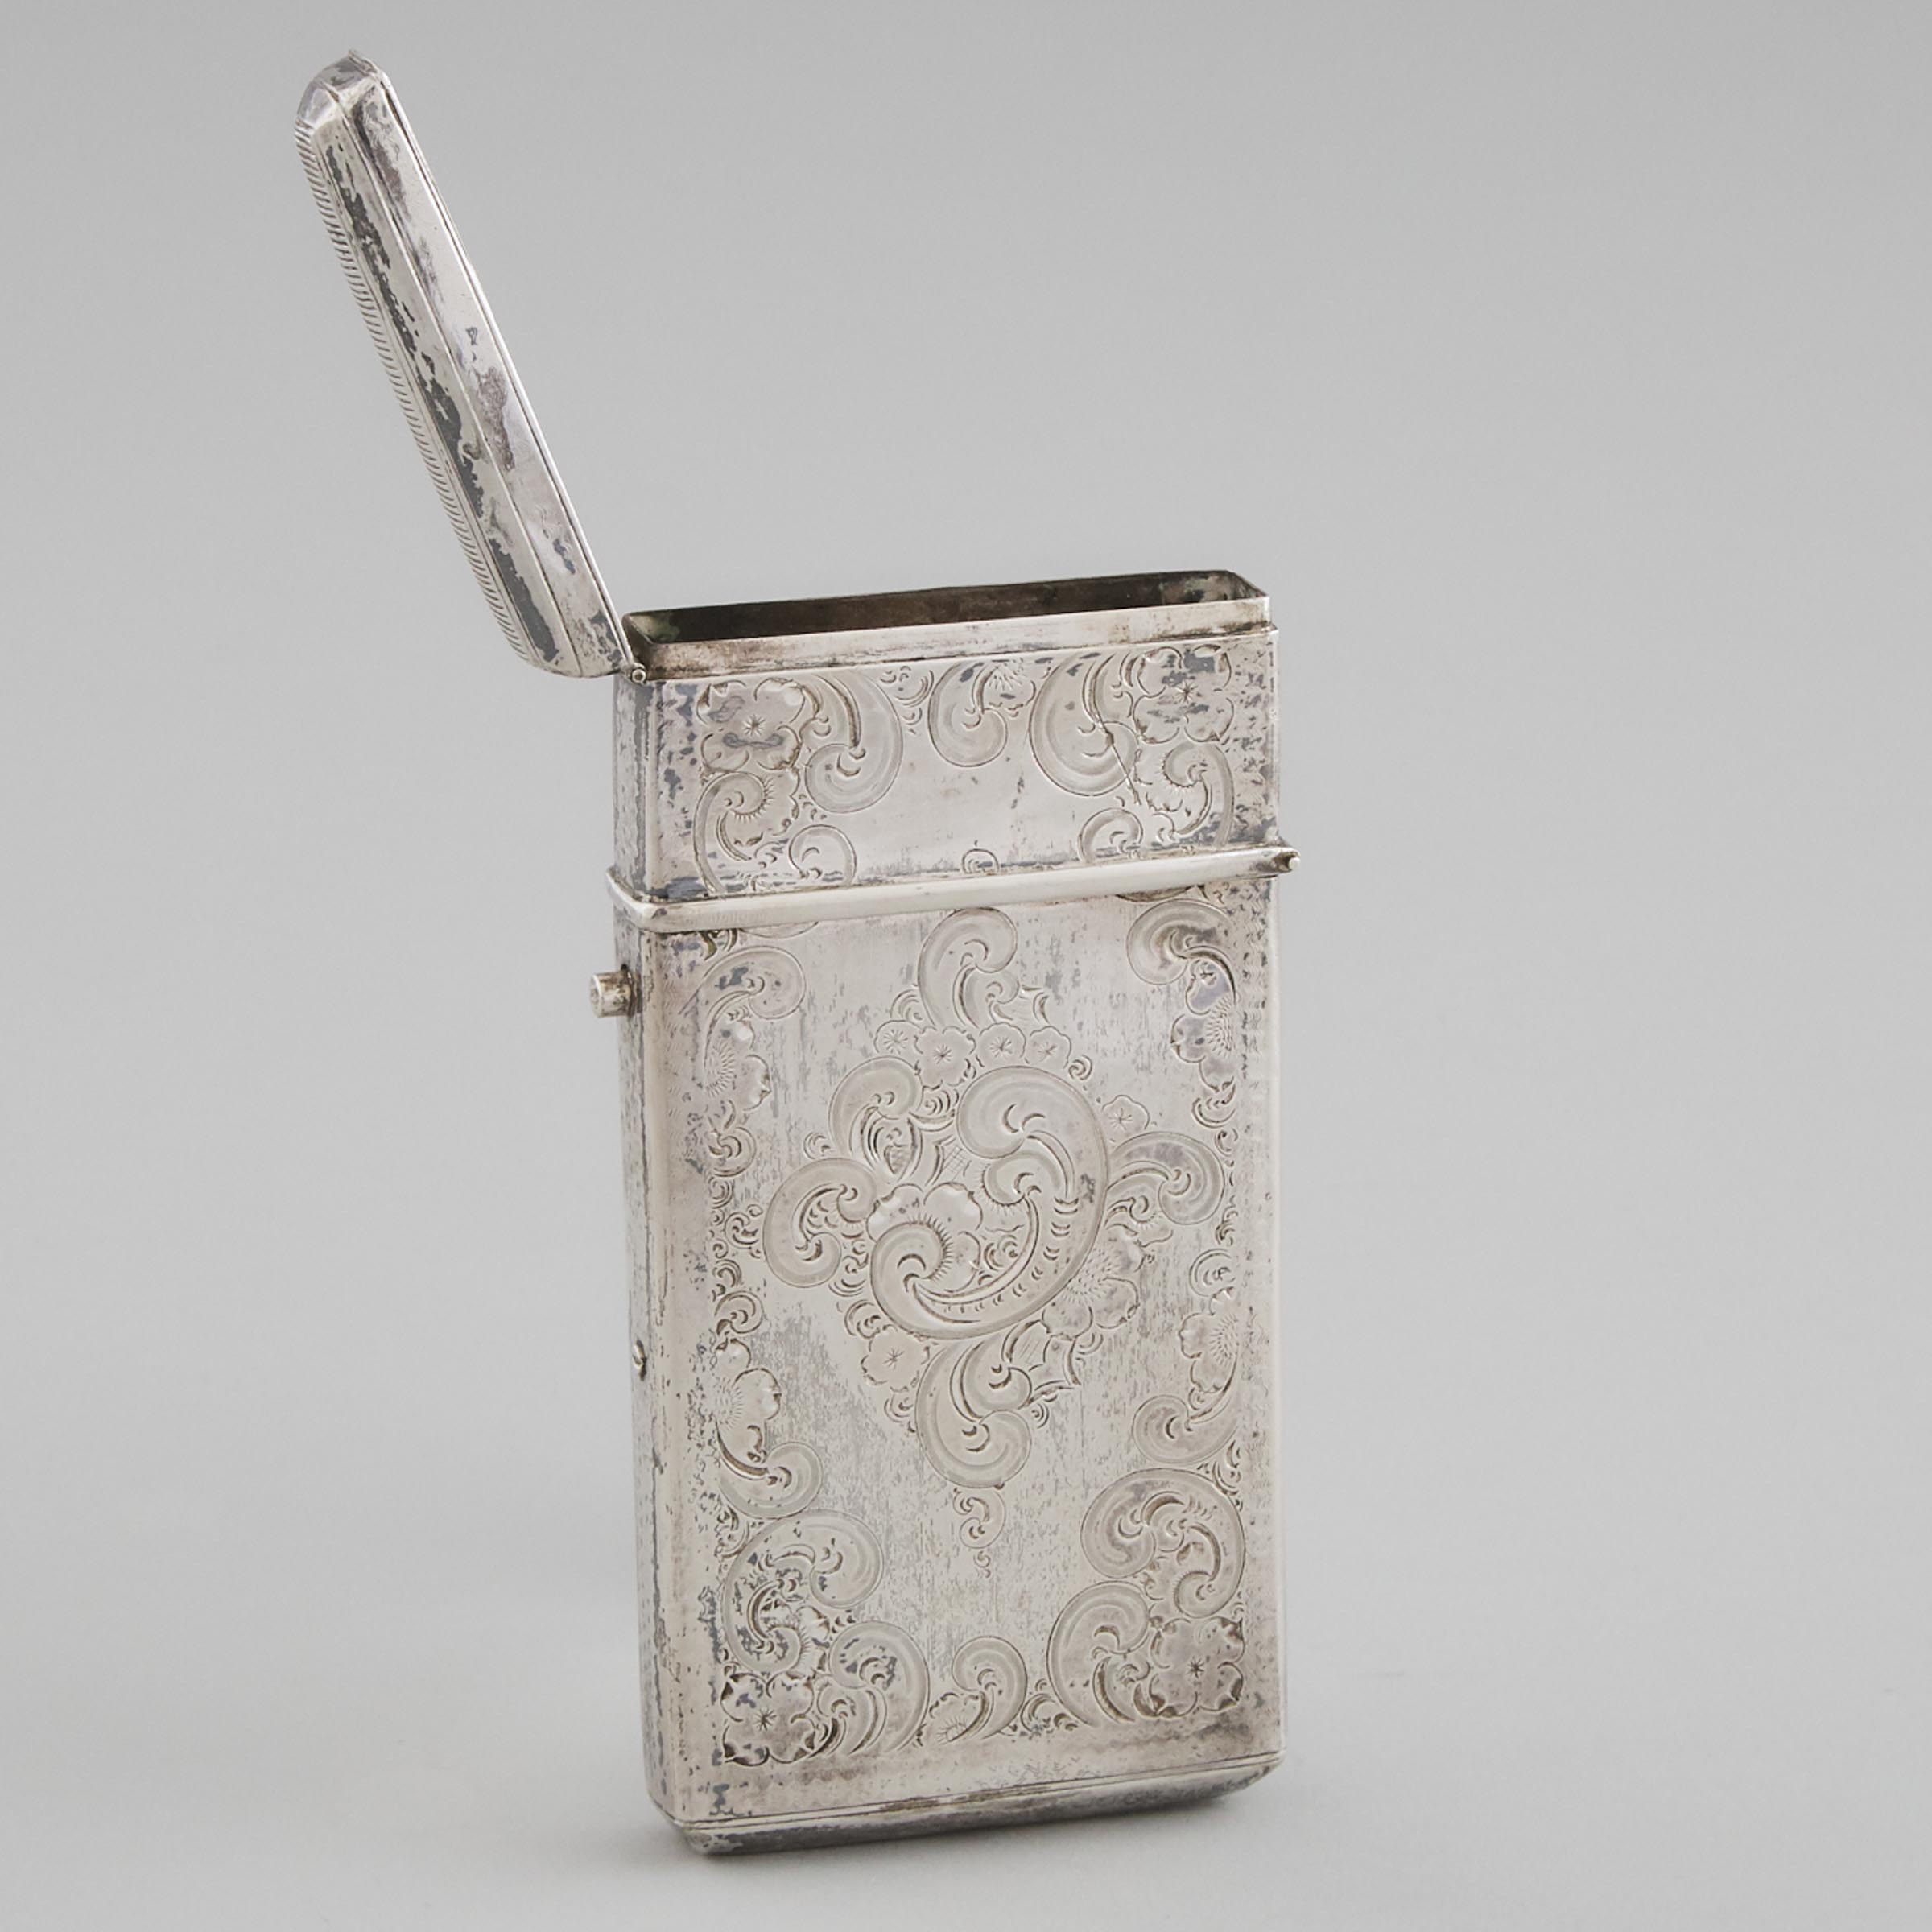 Dutch Silver Cigar Case with Vesta Compartment, Cornelis Monteban, Schoonhoven, late 19th century